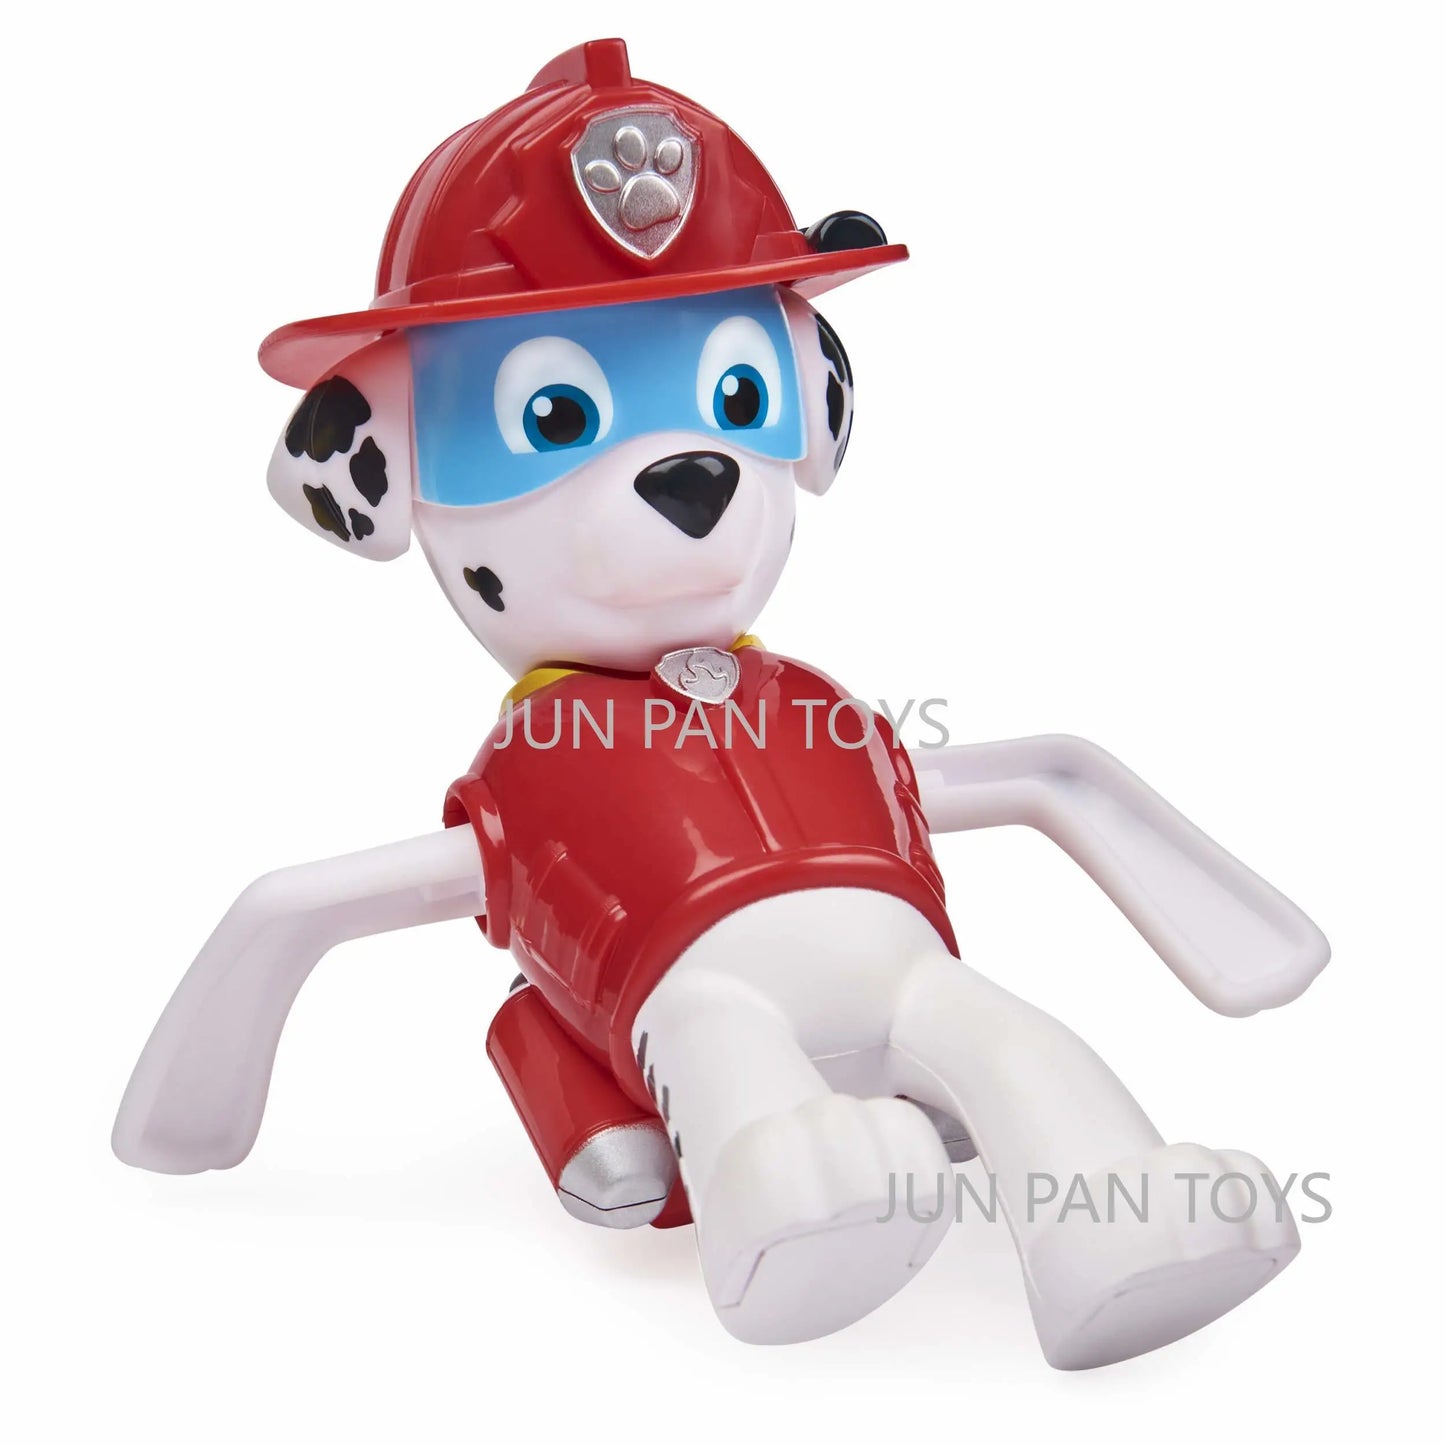 Original Paw Patrol Action Figure Toys SwimWays Paddlin' Pups Rubble Skye Everest Zuma Marshall Rocky Pool Party Bath Kids Toys